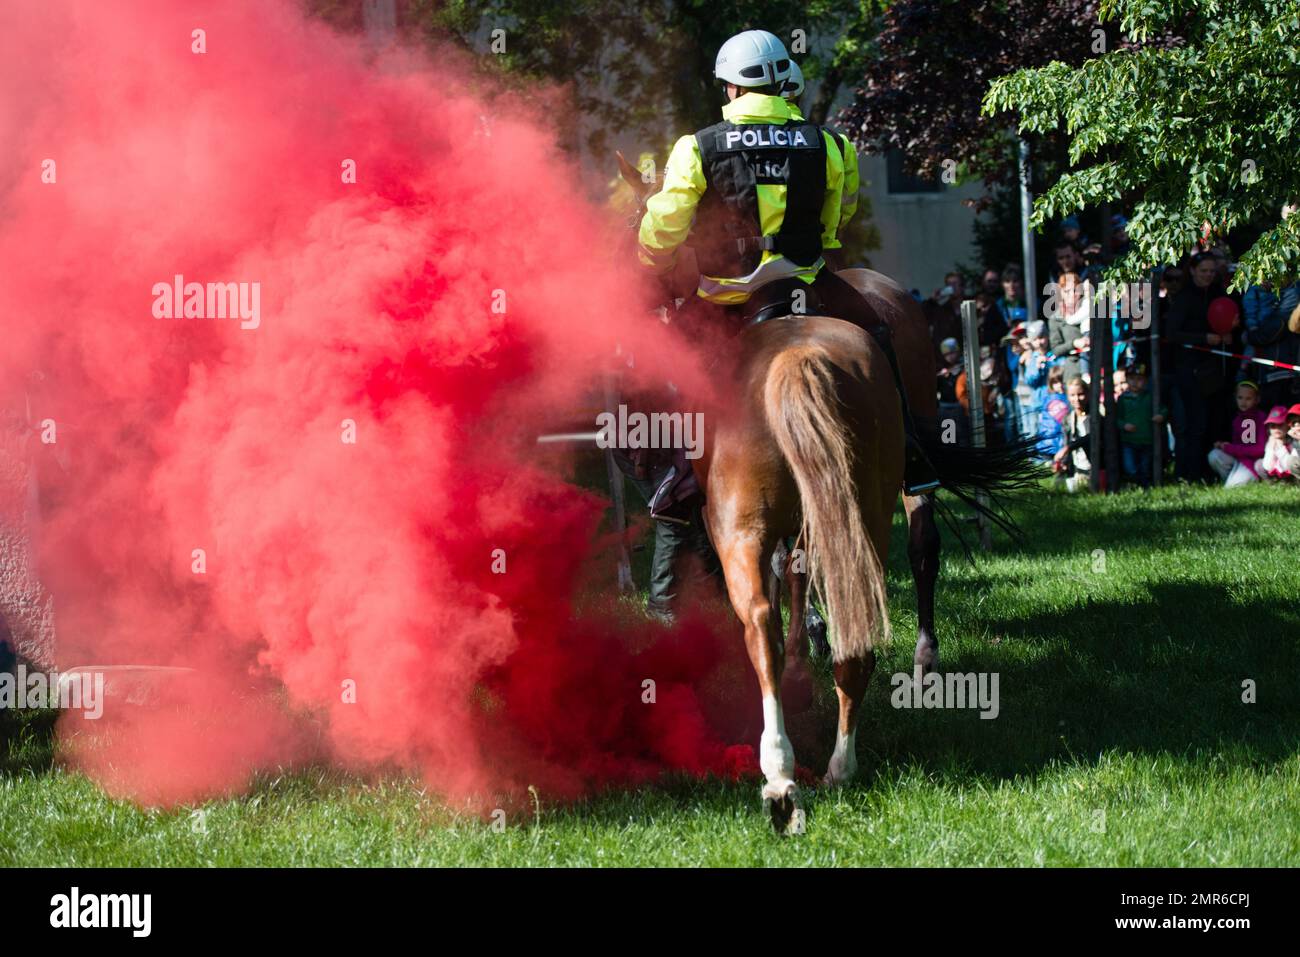 PEZINOK, SLOVAKIA - MAY 4, 2014: Demonstration of mounted police horses walking through the smoke in Pezinok, Slovakia Stock Photo